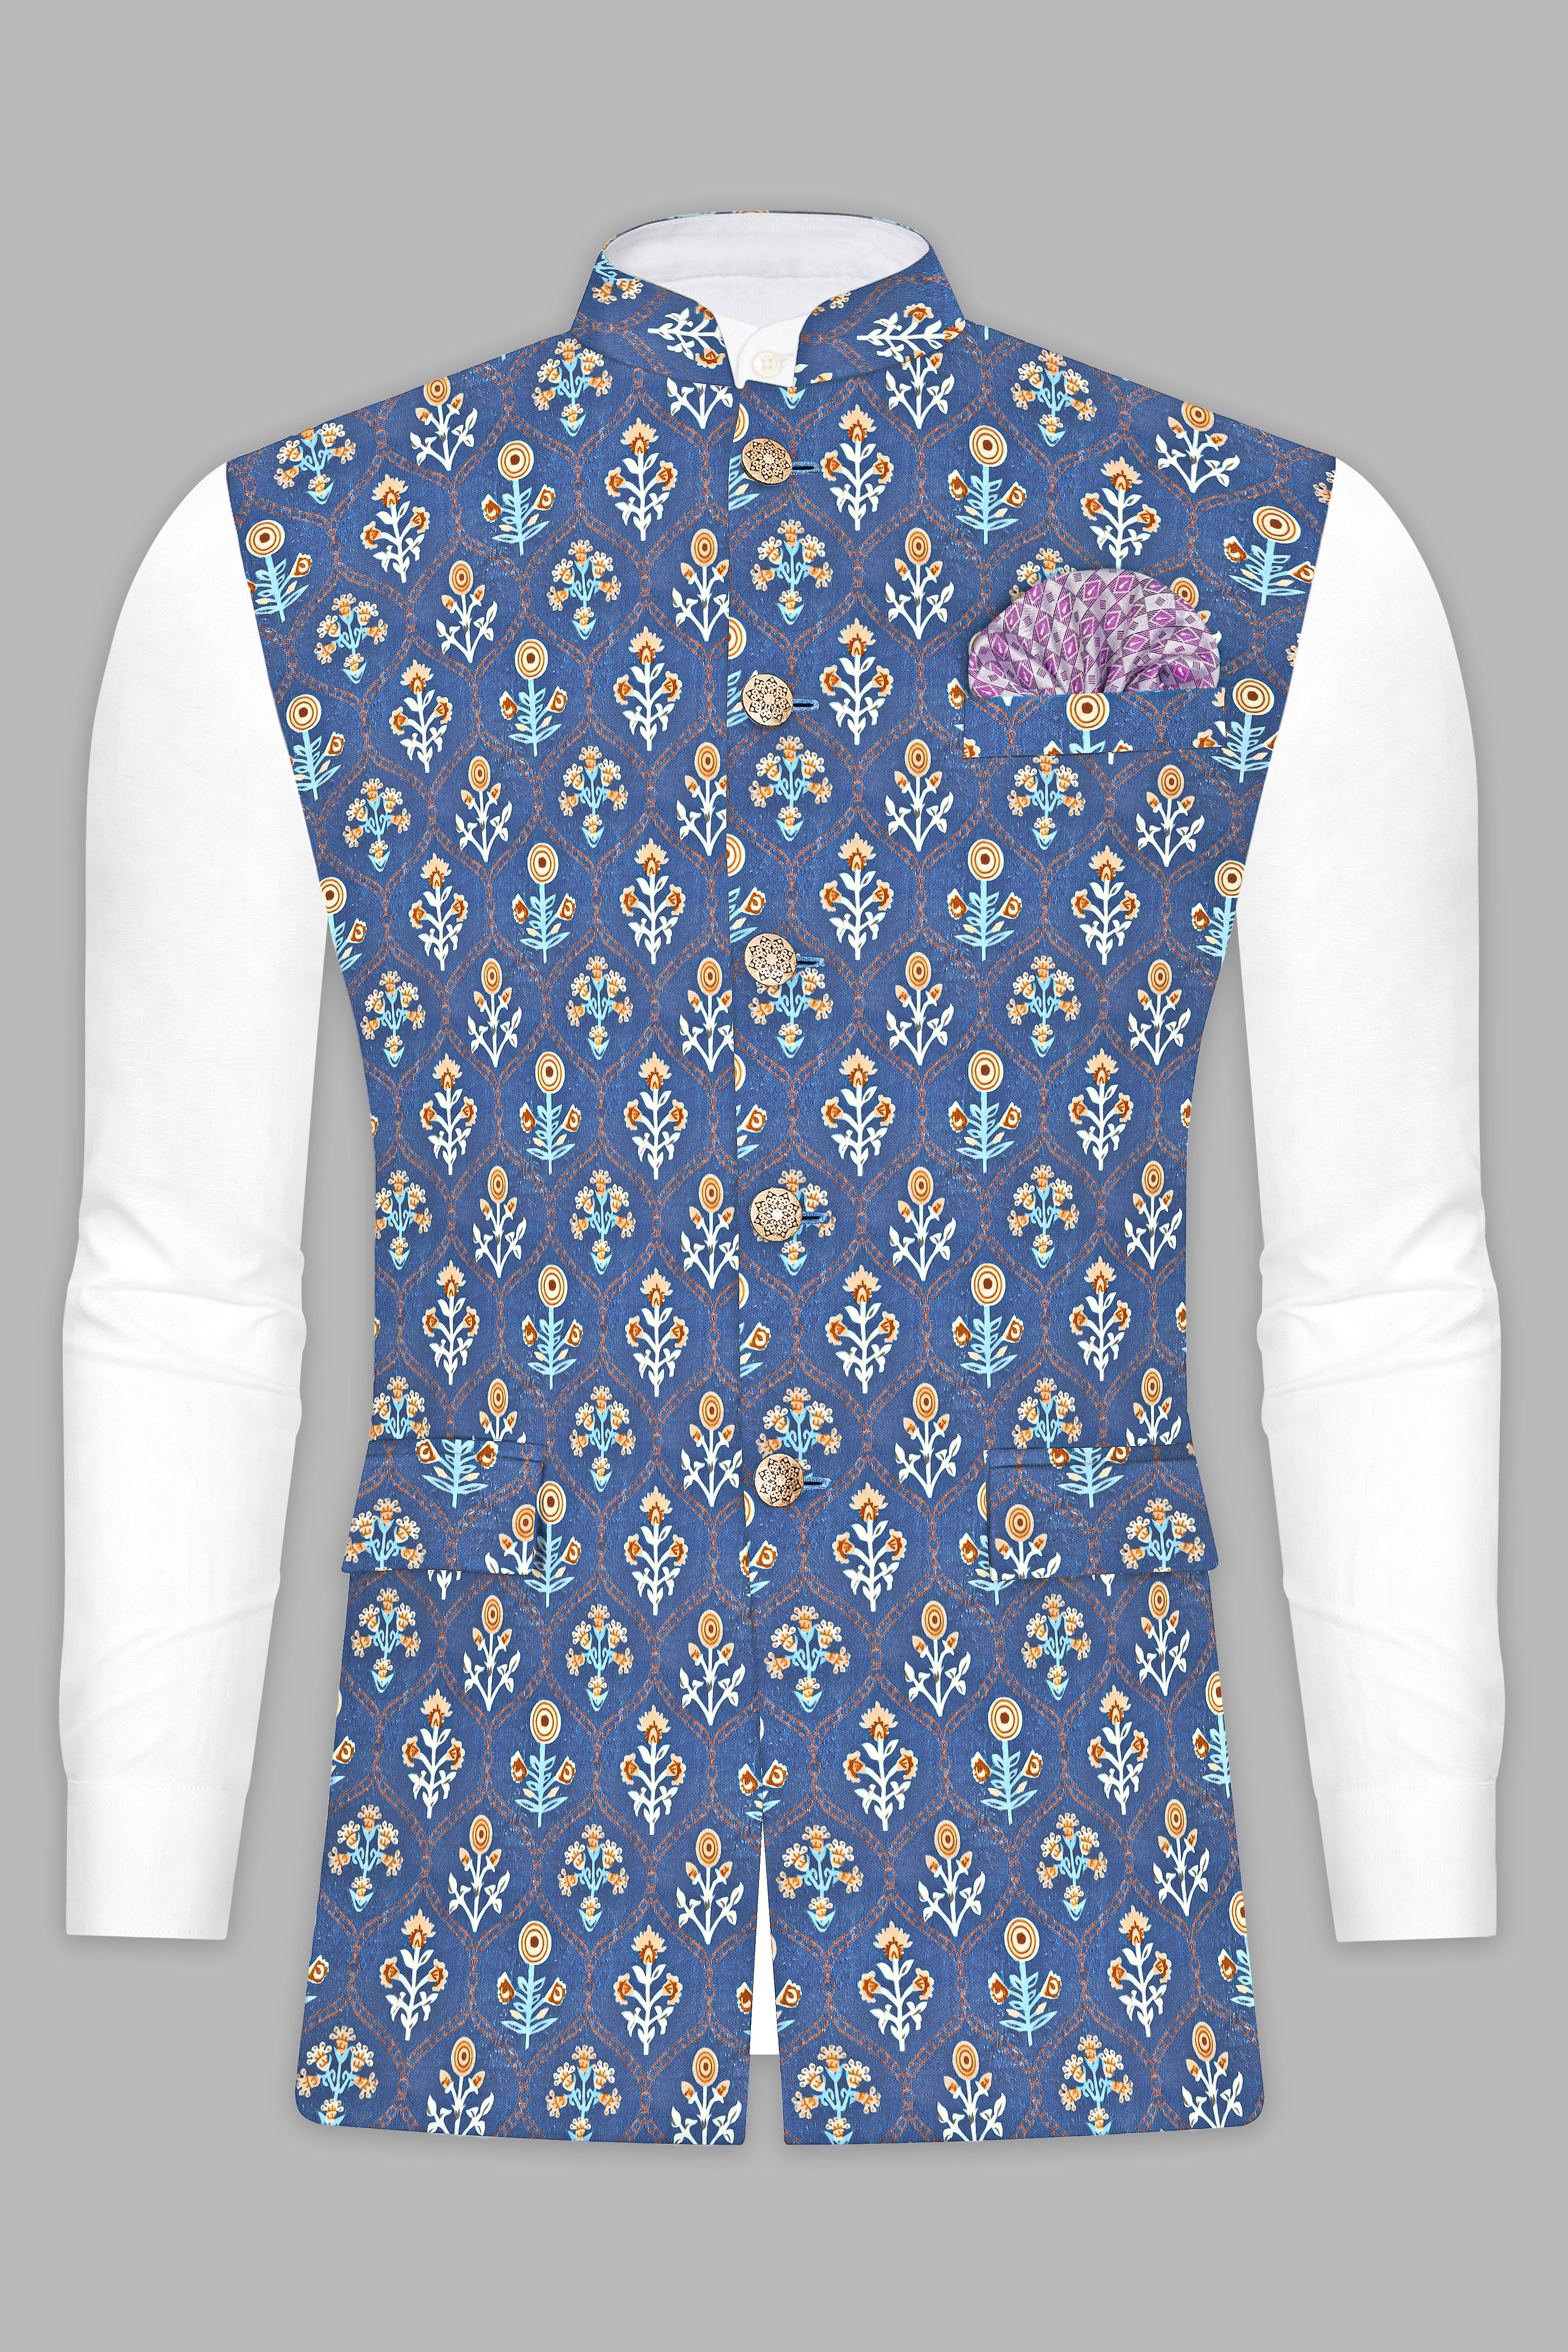 Tealish Blue And Peach Velvet Designer Printed Nehru Jacket